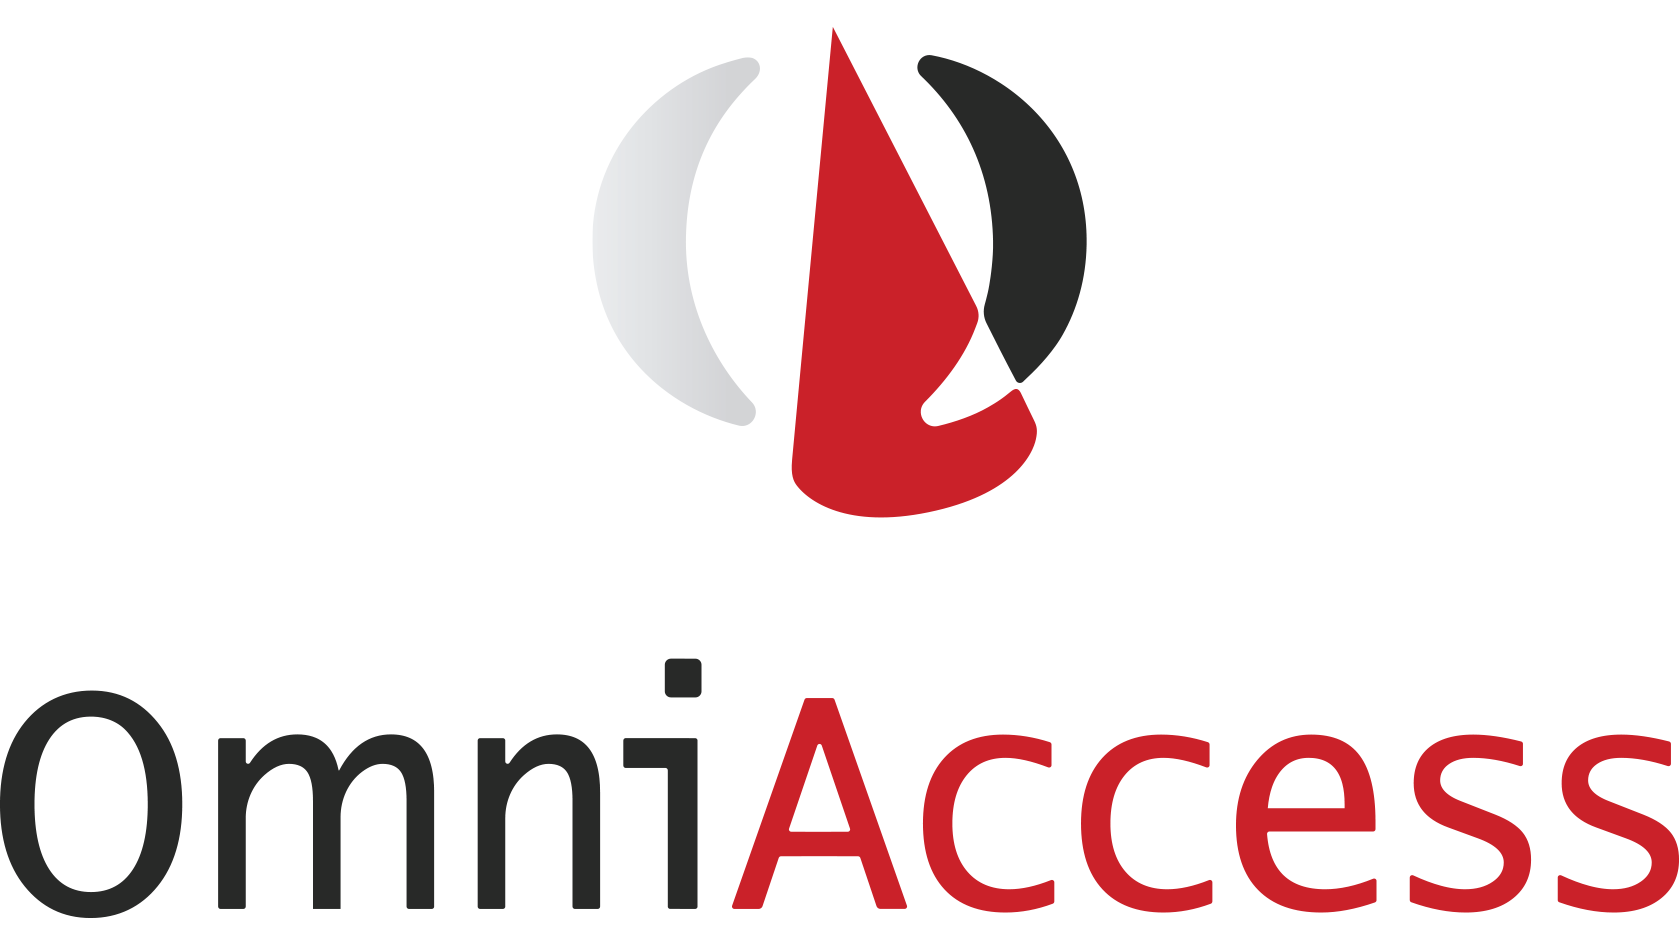 OmniAccess logo